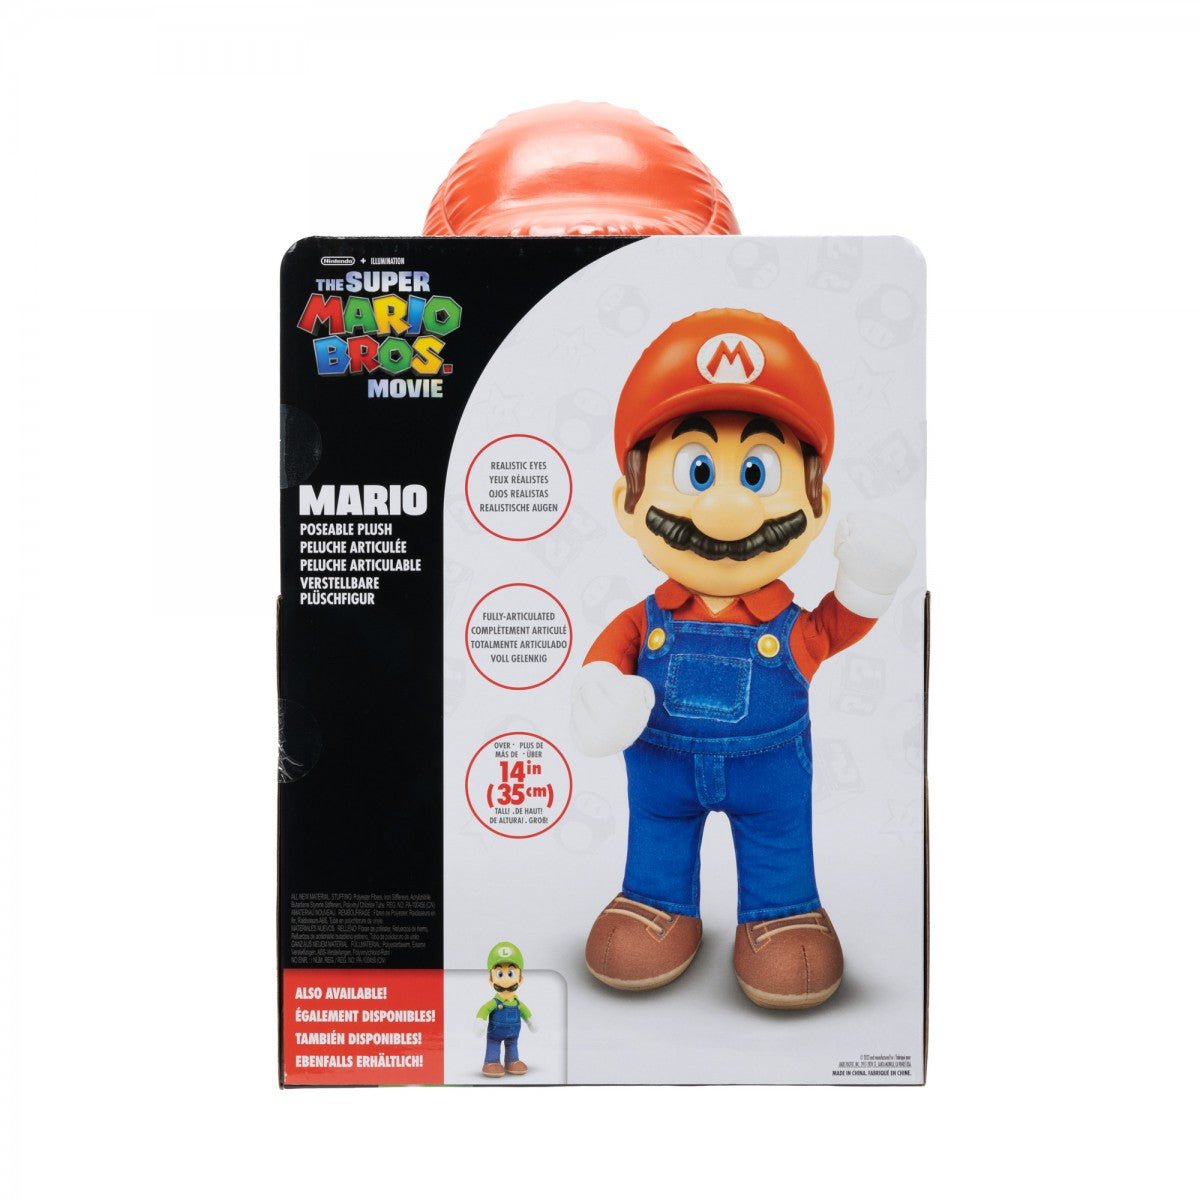 The Super Mario Bros. Movie 35cm Poseable Plush - Inspire Newquay